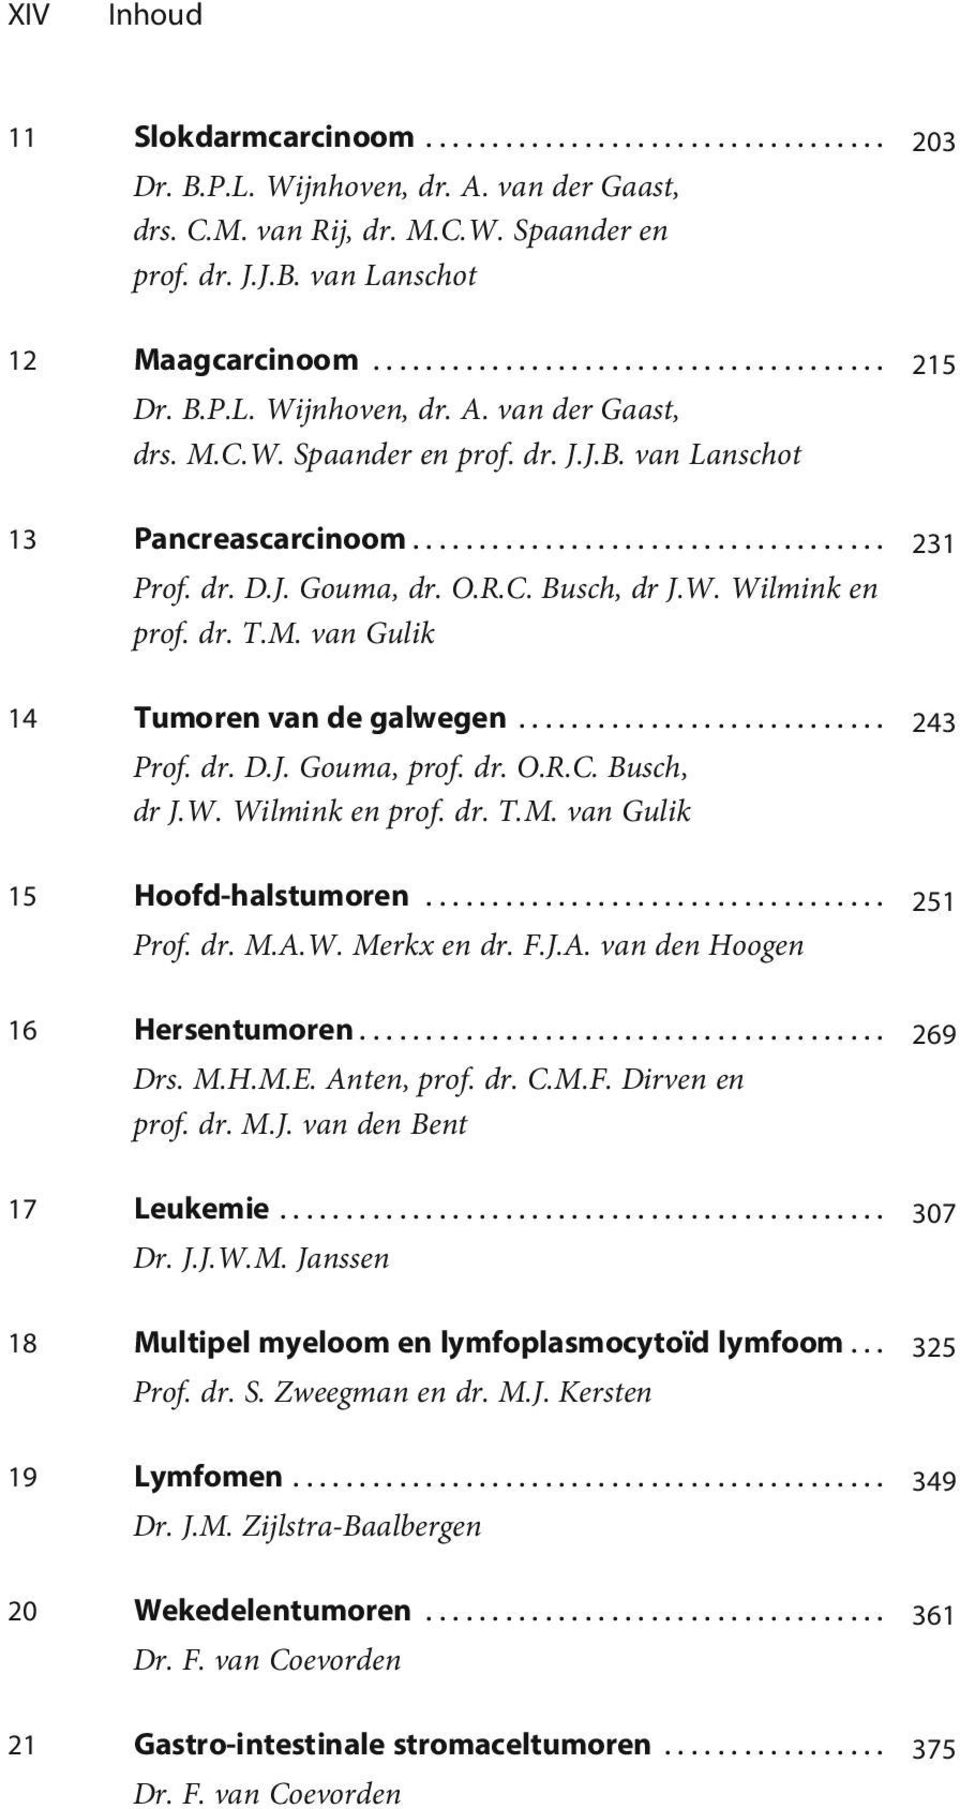 .. 251 Prof. dr. M.A.W. Merkx en dr. F.J.A. van den Hoogen 16 Hersentumoren... 269 Drs. M.H.M.E. Anten, prof. dr. C.M.F. Dirven en prof. dr. M.J. van den Bent 17 Leukemie... 307 Dr. J.J.W.M. Janssen 18 Multipel myeloom en lymfoplasmocytoïd lymfoom.